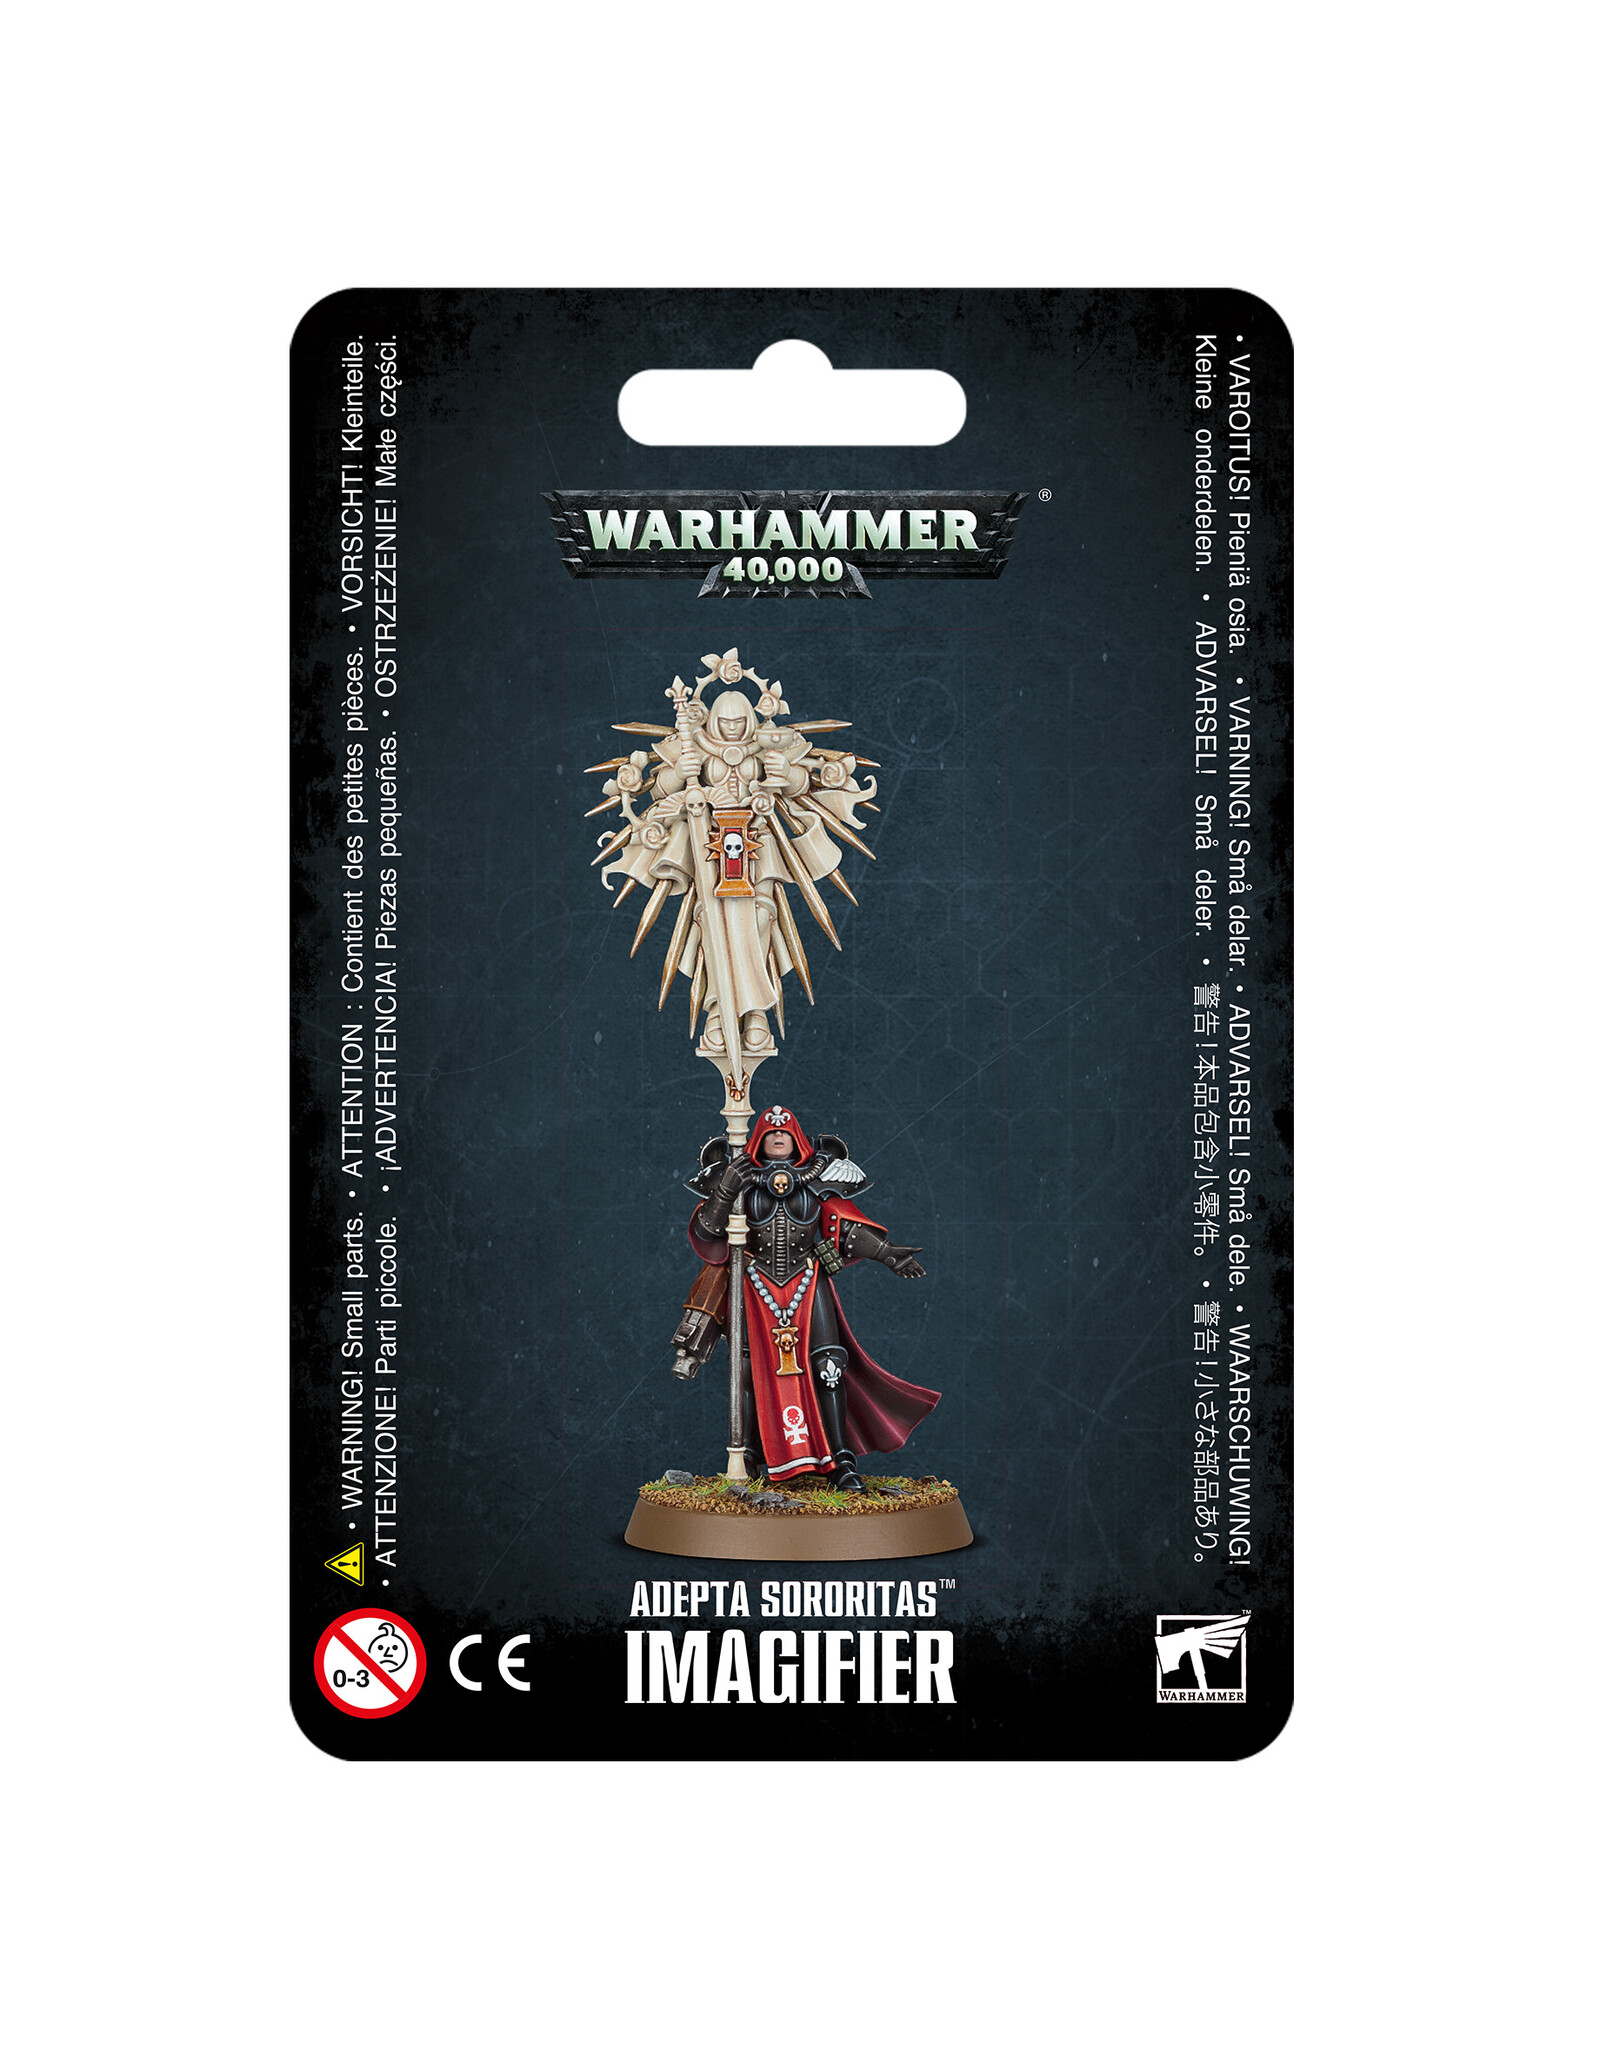 Warhammer 40K Adepta Sororitas Imagifier